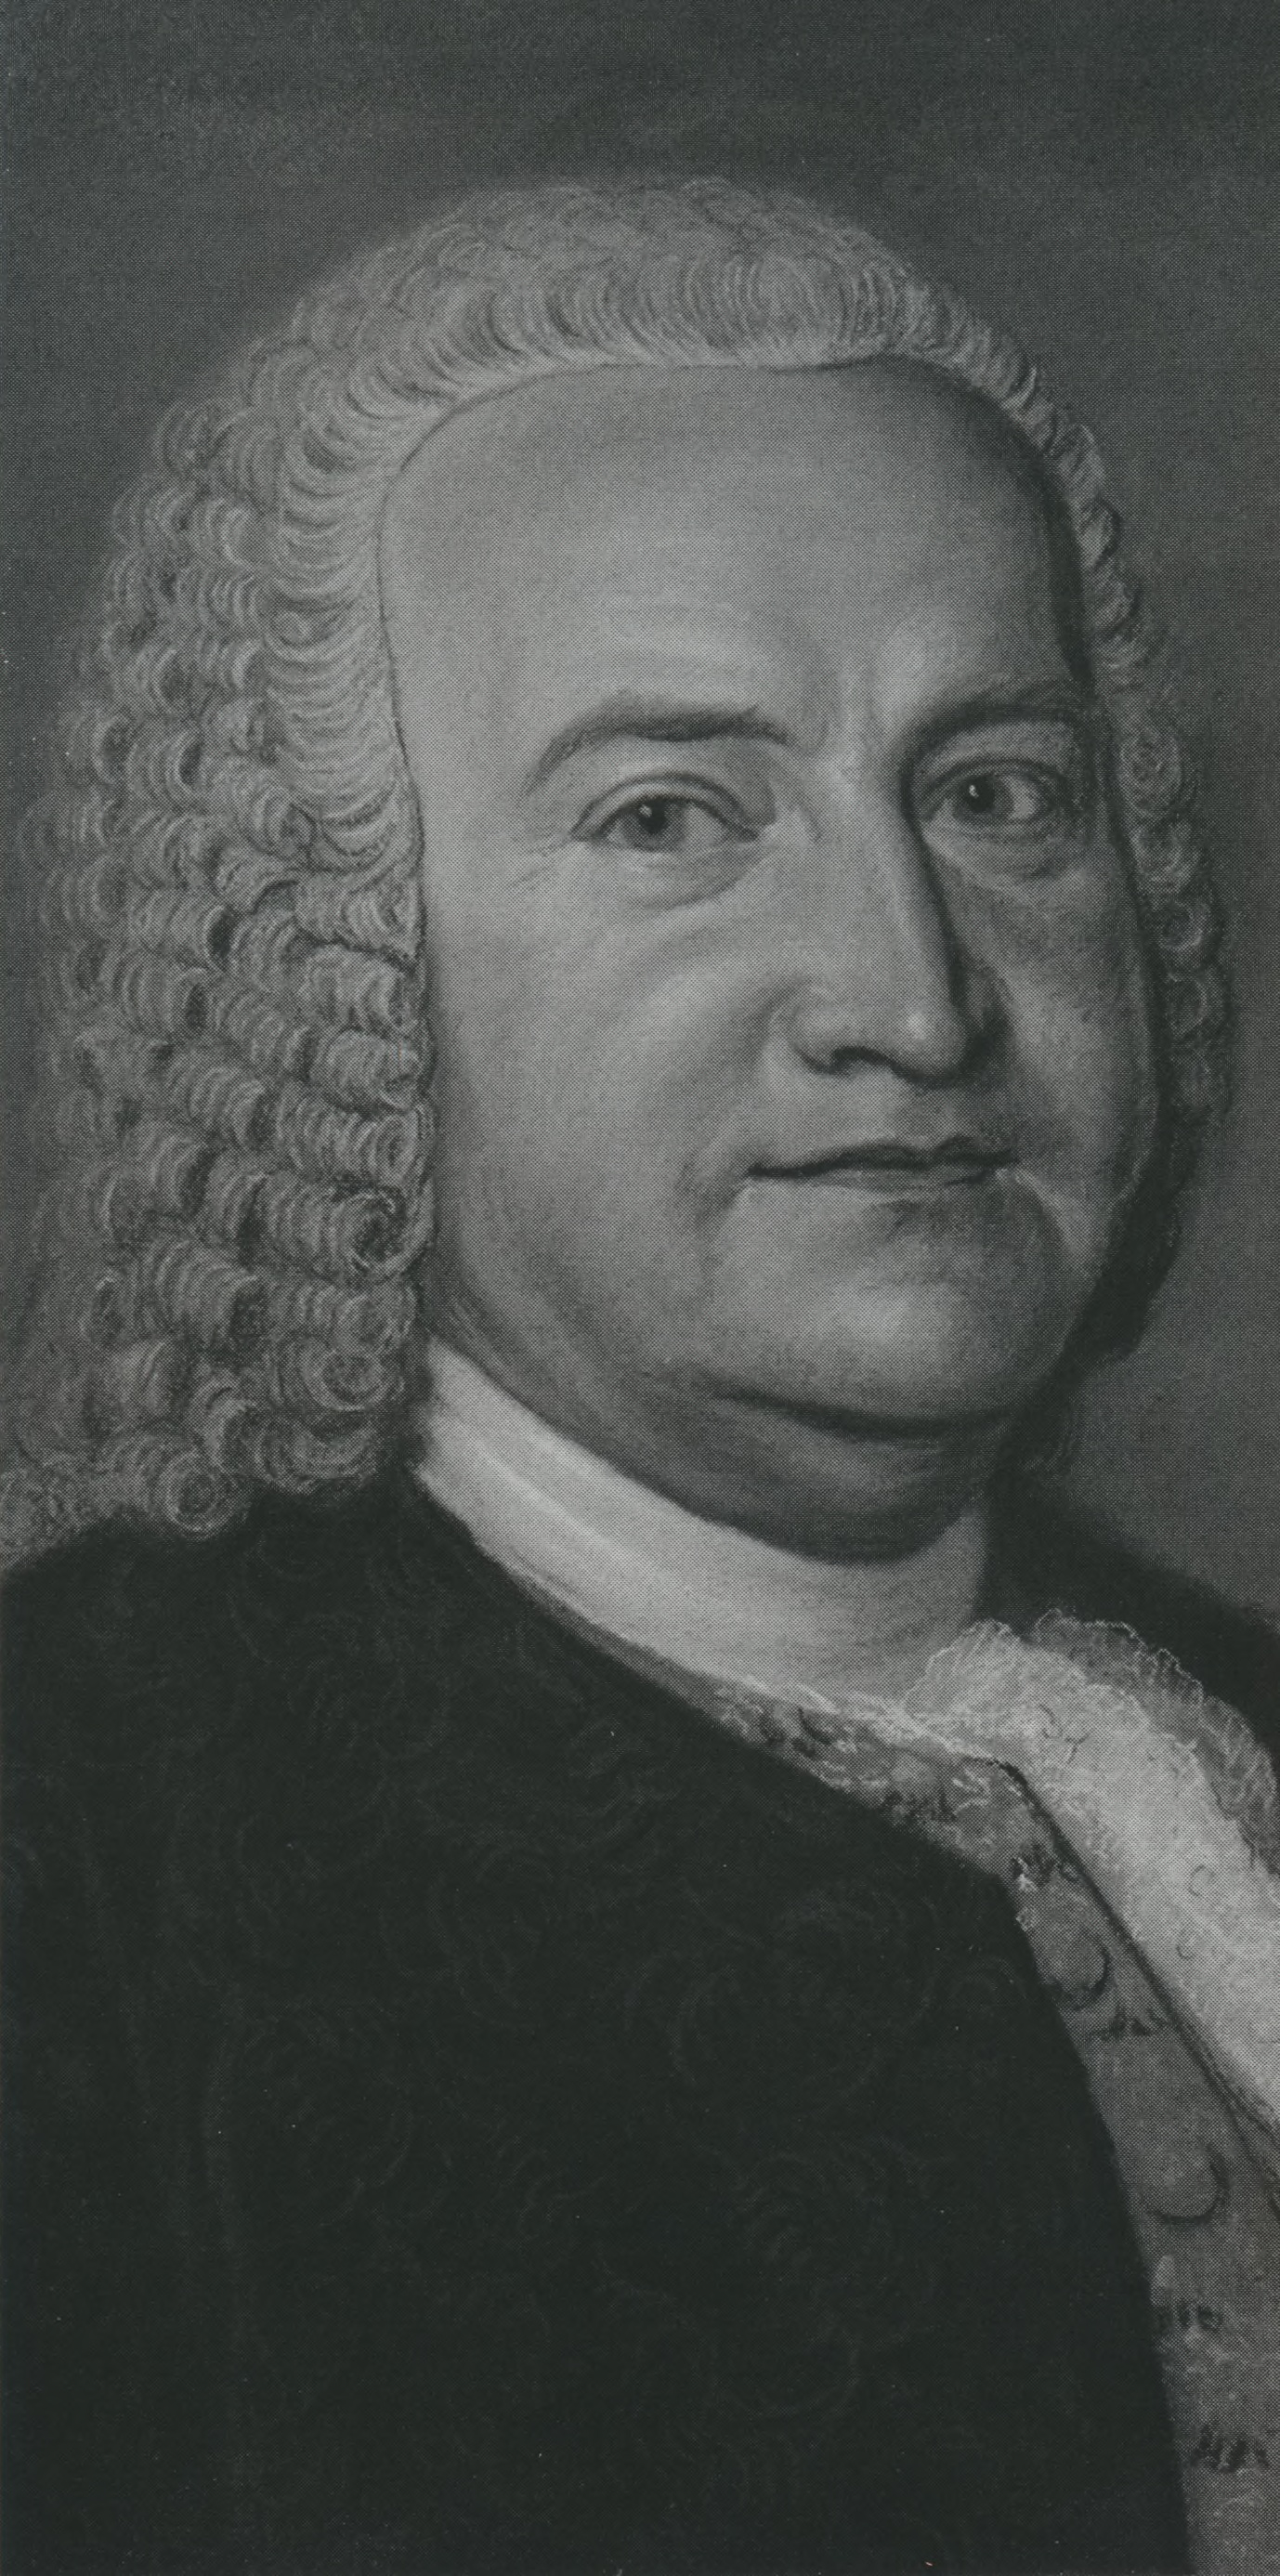 Johann Sebastian BACH, portrait fait par Elias Gottlob HAUSSMANN en 1746